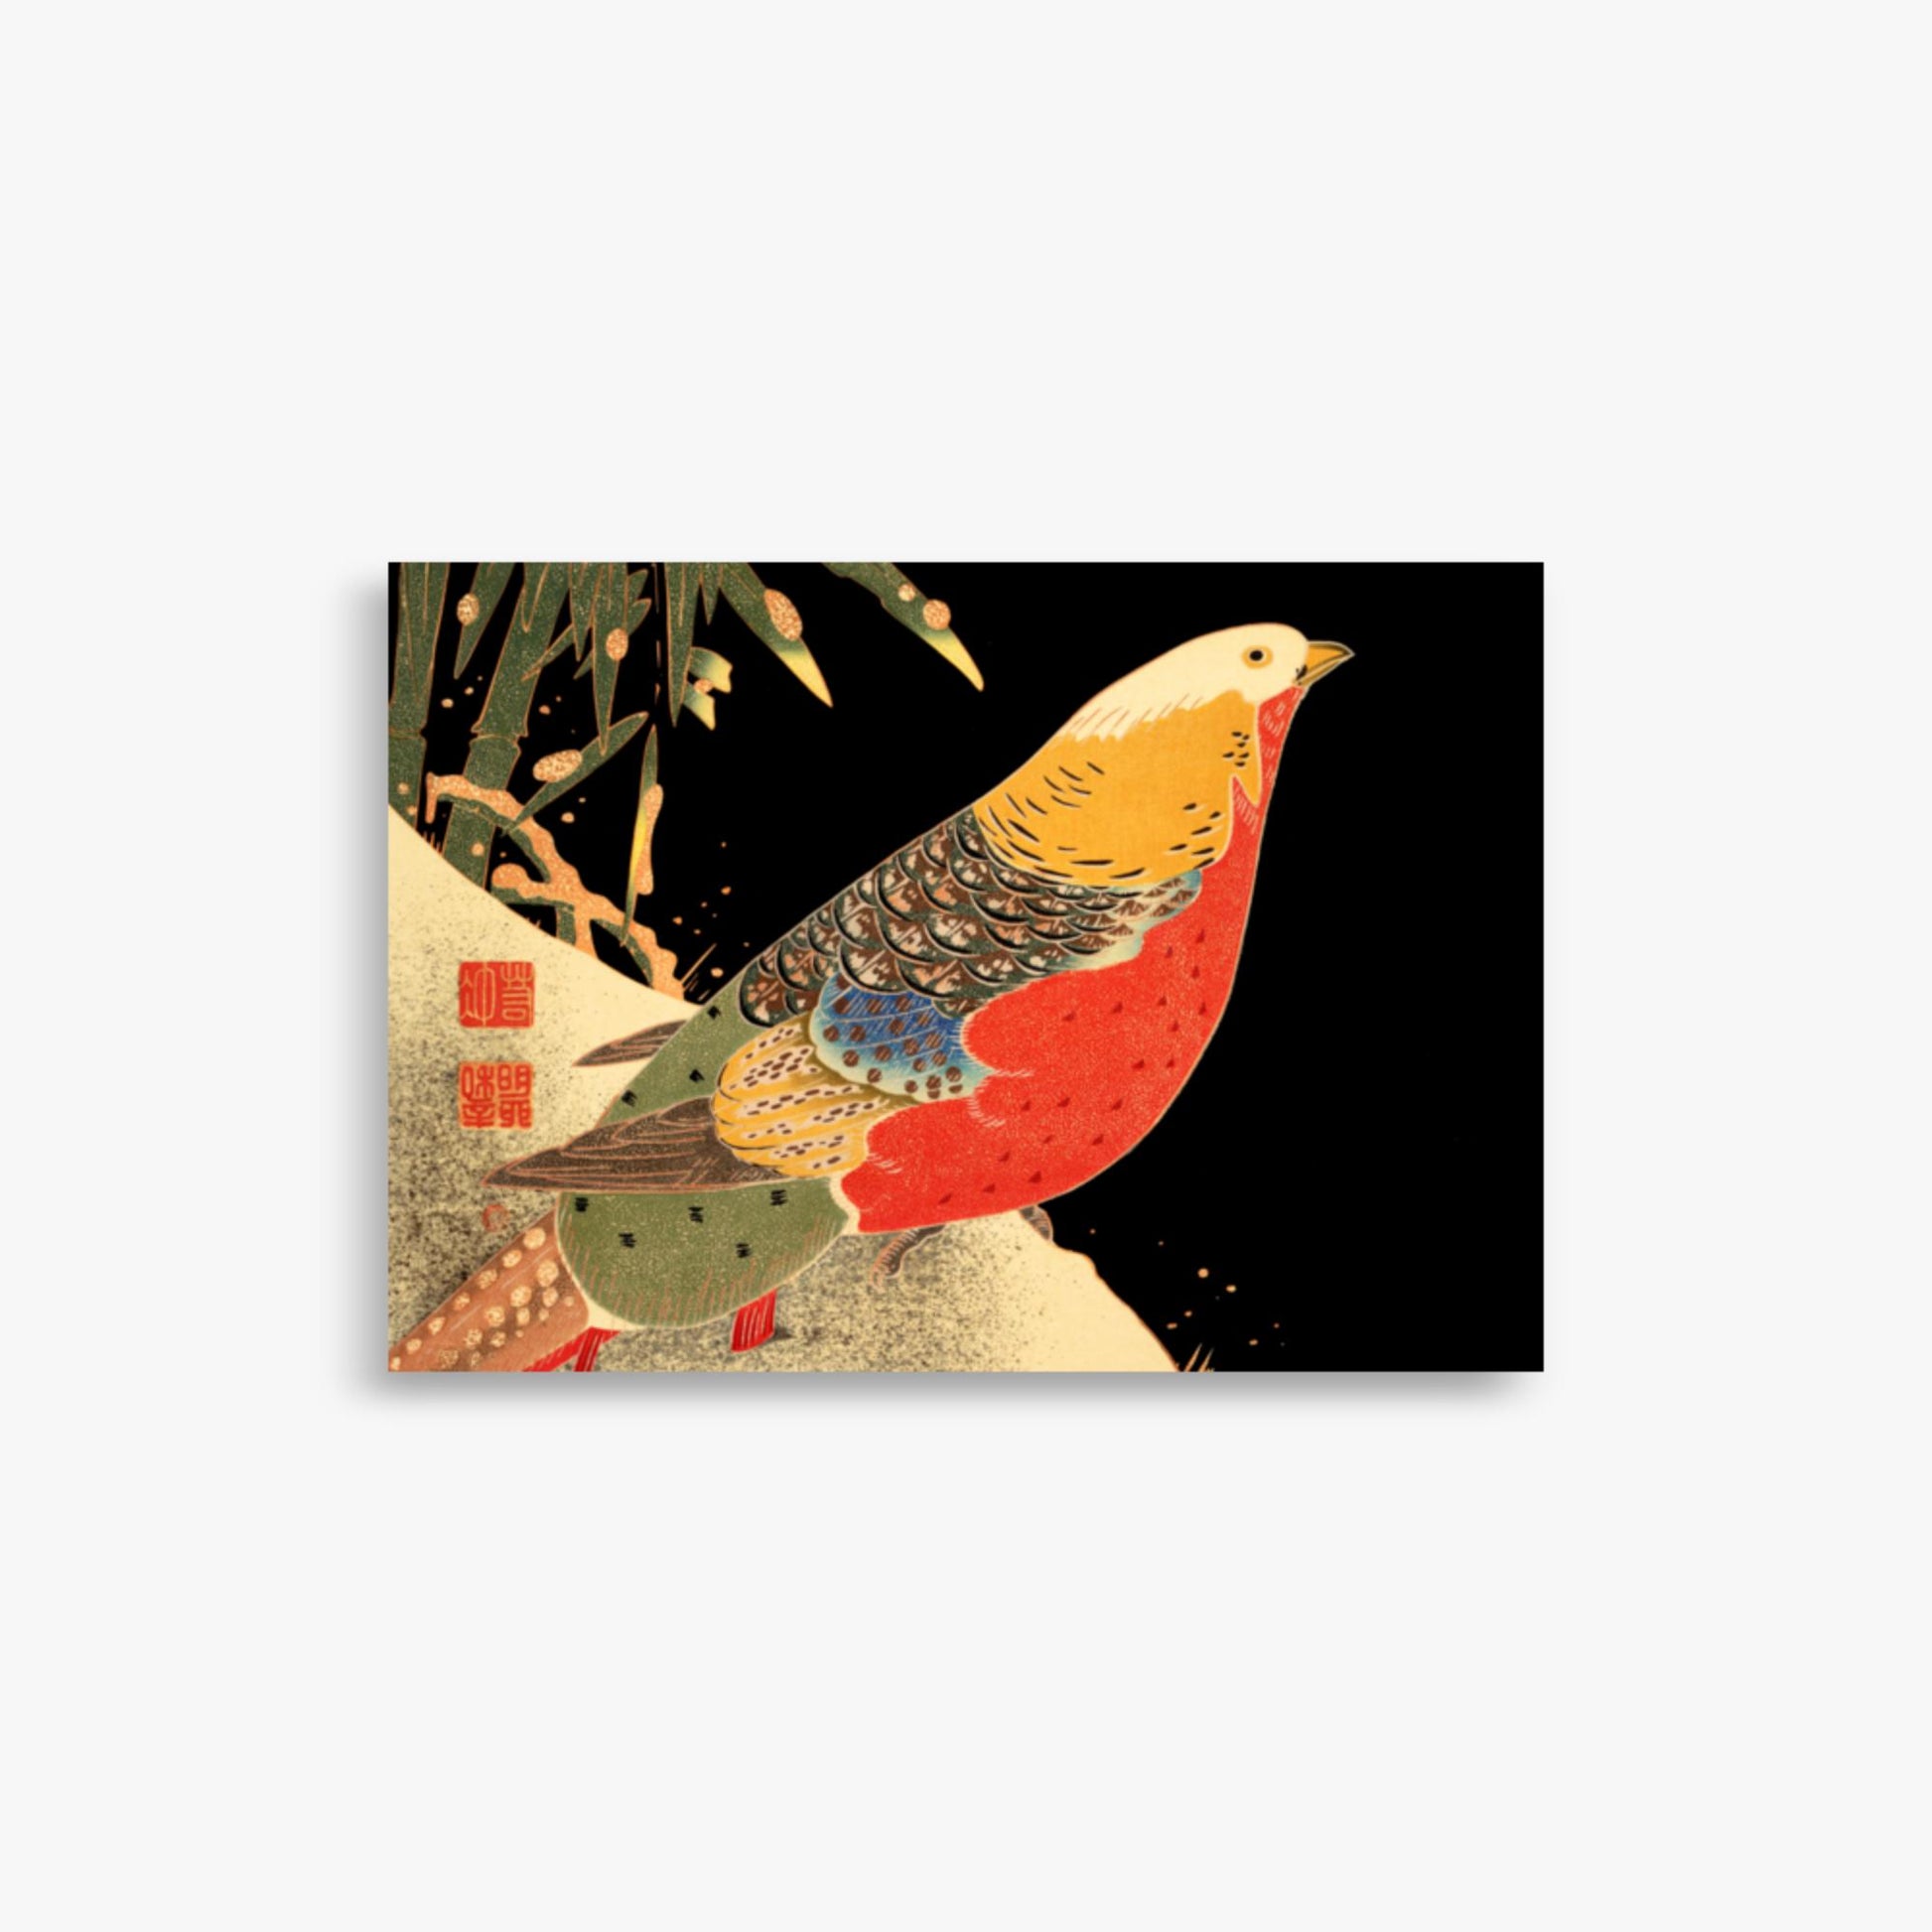 Ito Jakuchu - Golden Pheasant in the Snow 21x30 cm Poster